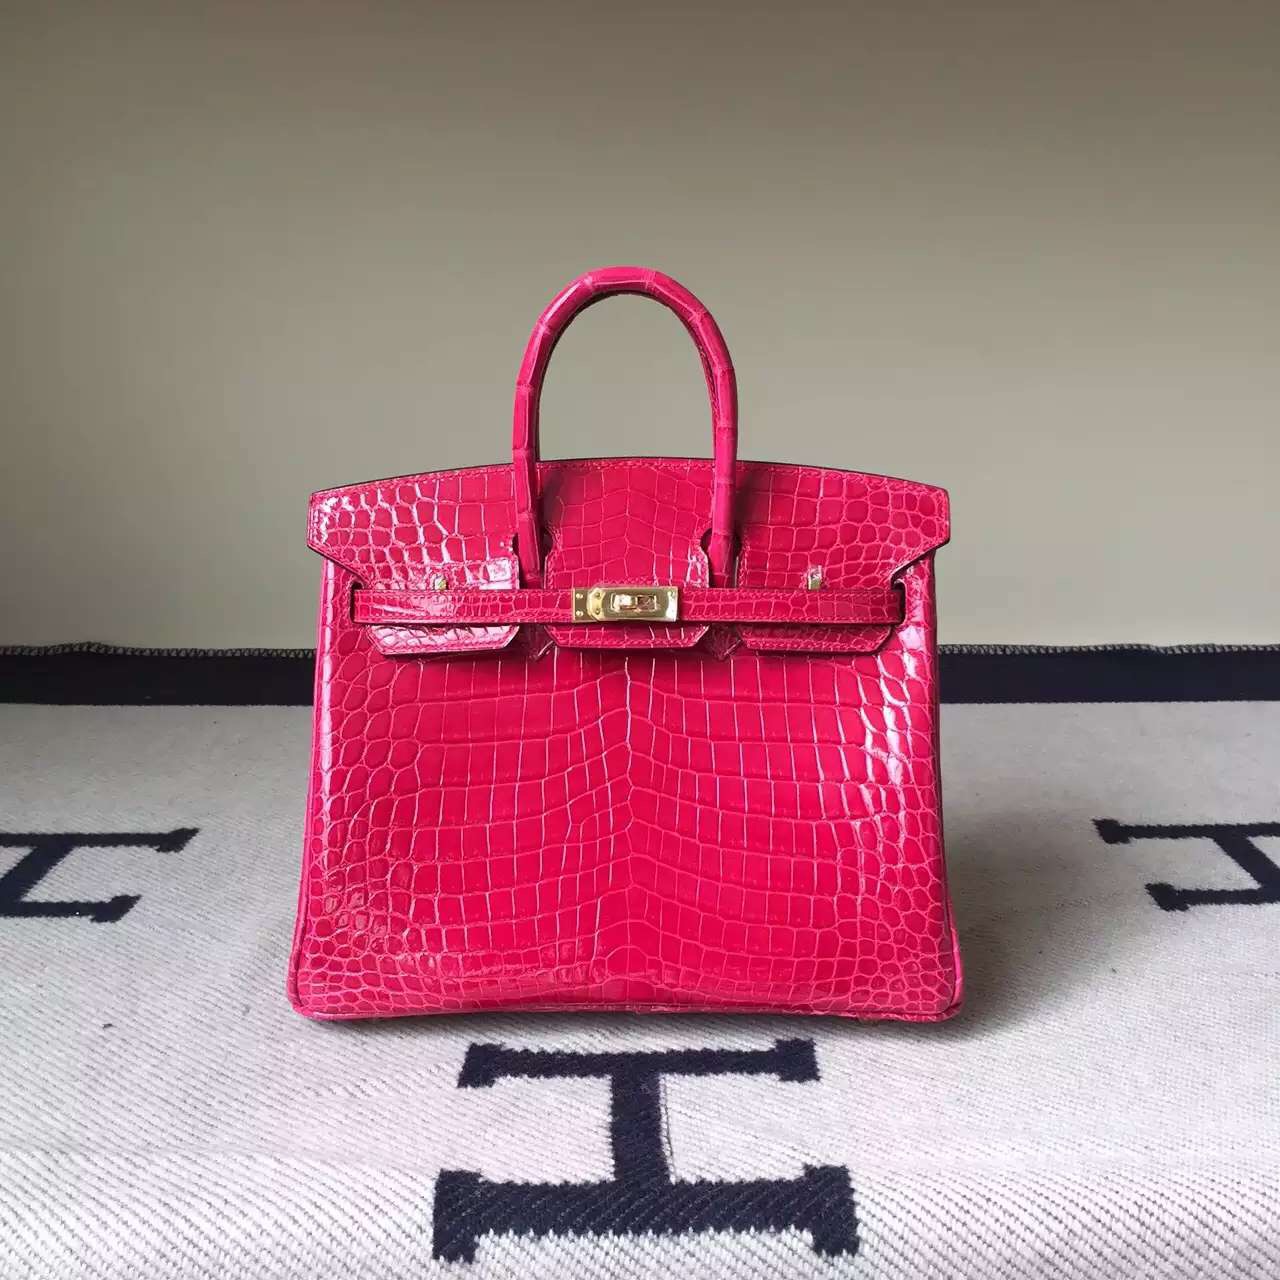 Sale Hermes Hot Pink Crocodile Shiny Leather Birkin Bag 25cm